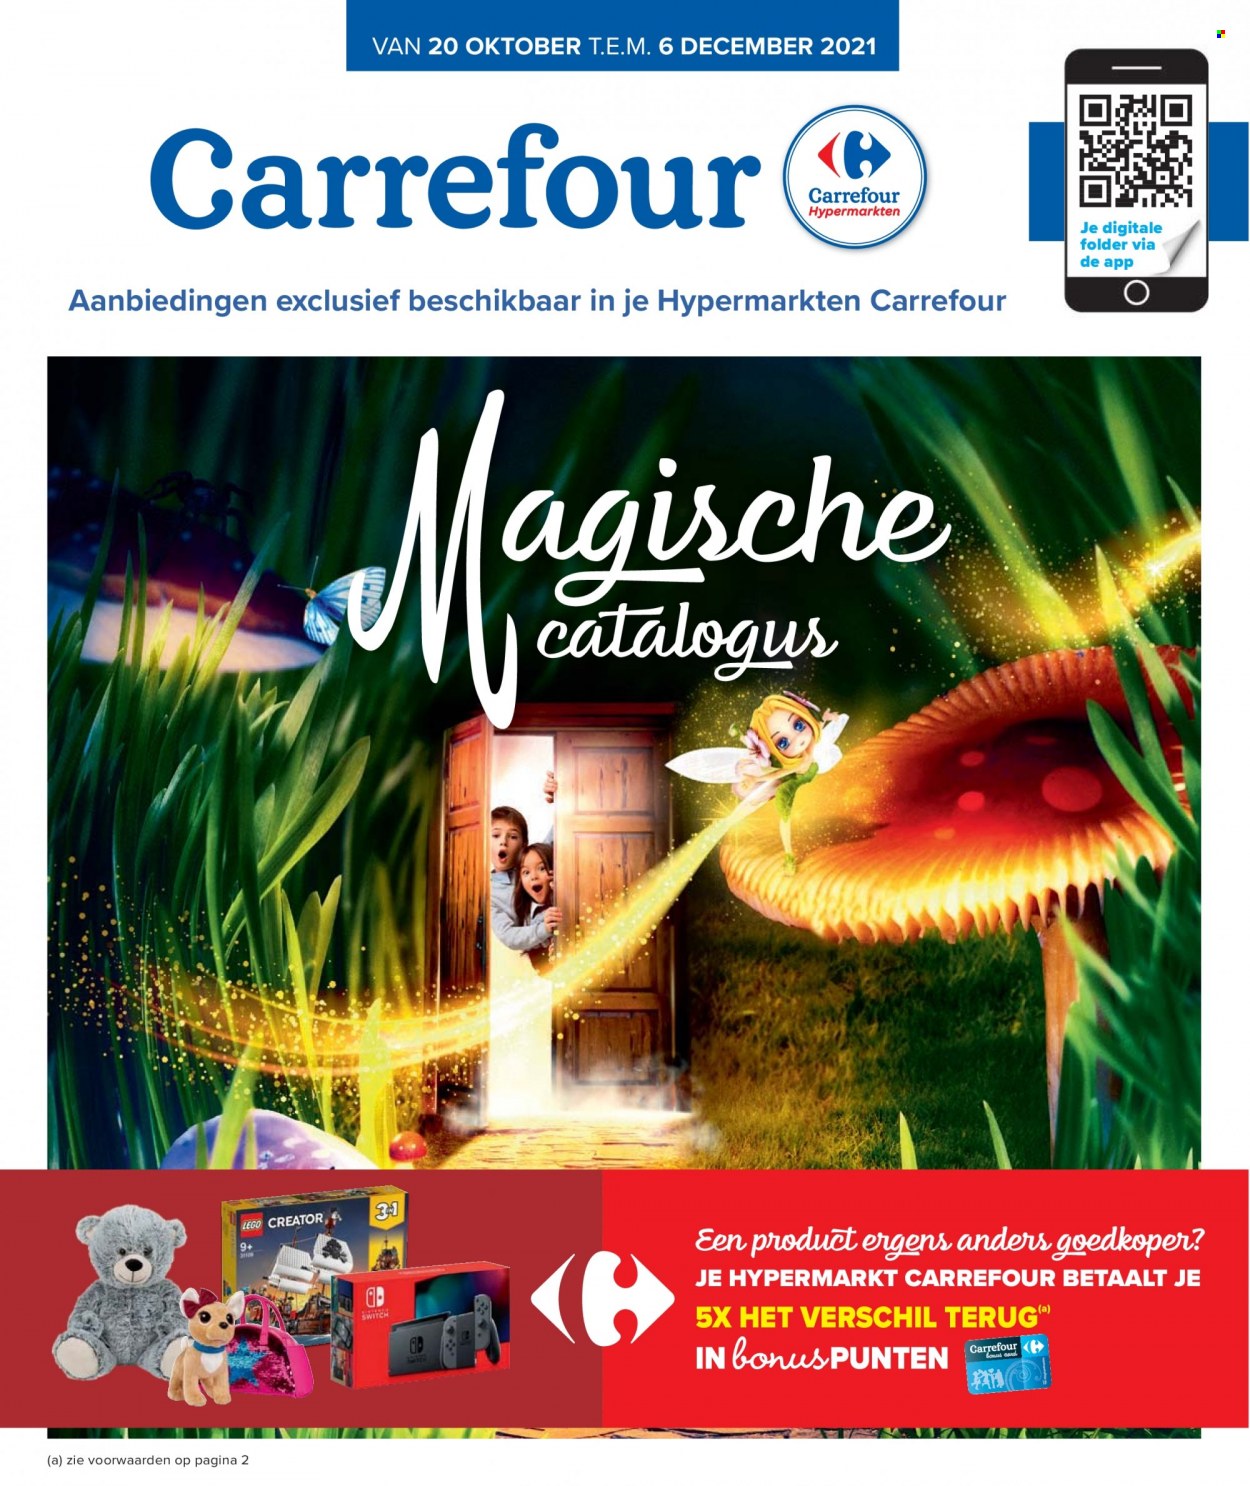 thumbnail - Catalogue Carrefour hypermarkt - 20/10/2021 - 06/12/2021 - Produits soldés - Lego, Lego Creator. Page 1.